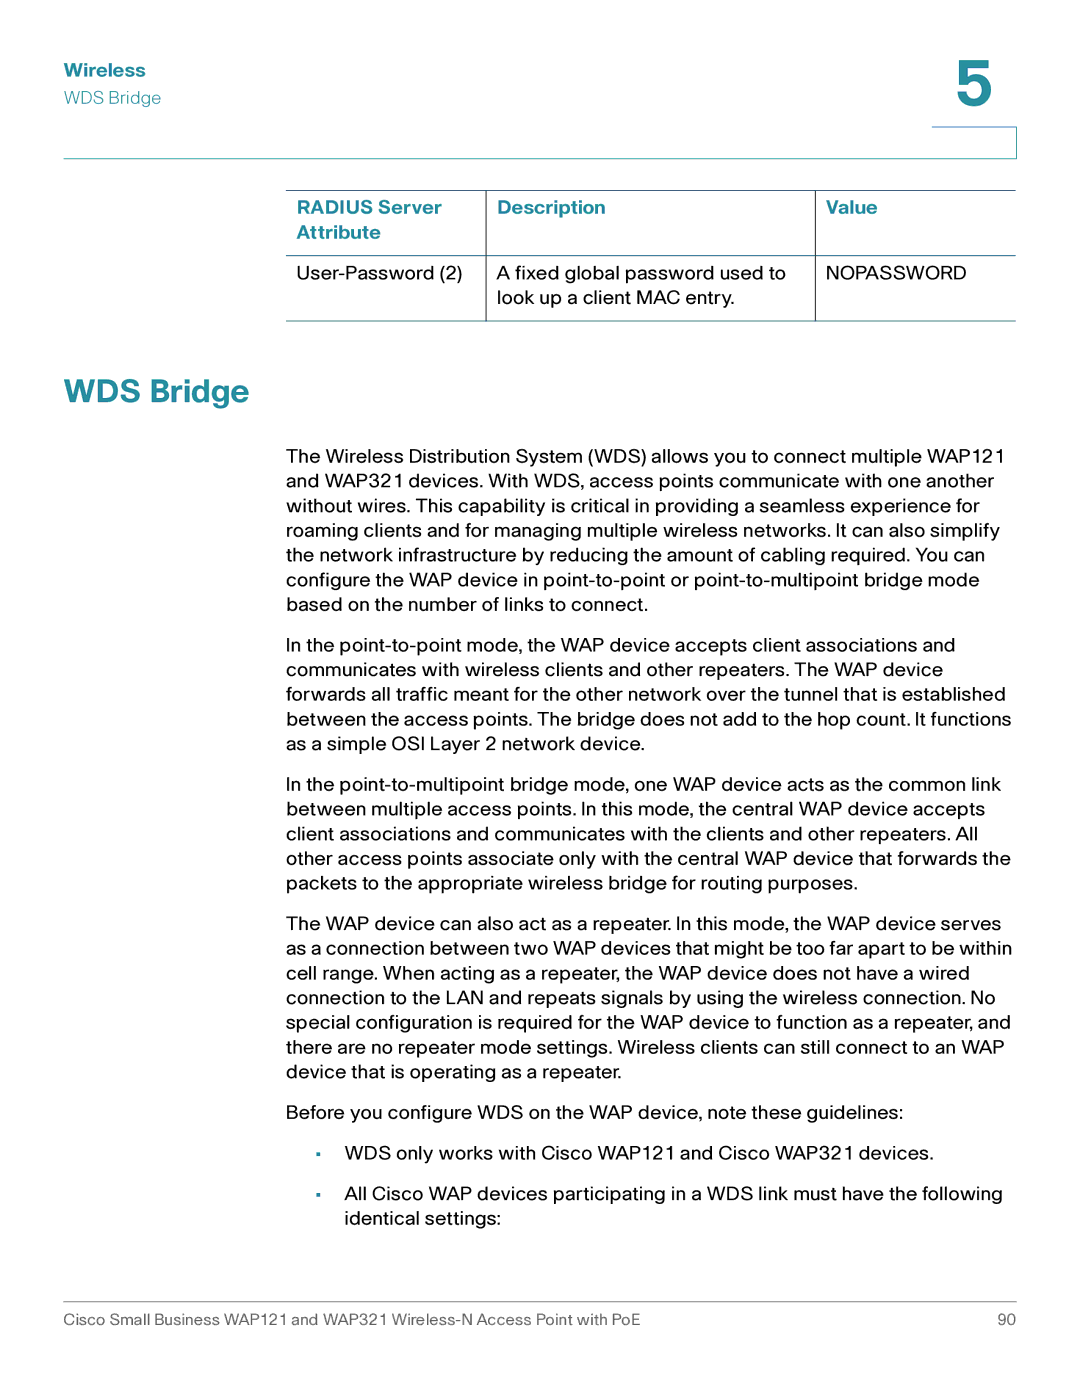 Cisco Systems WAP121, WAP321 manual WDS Bridge 